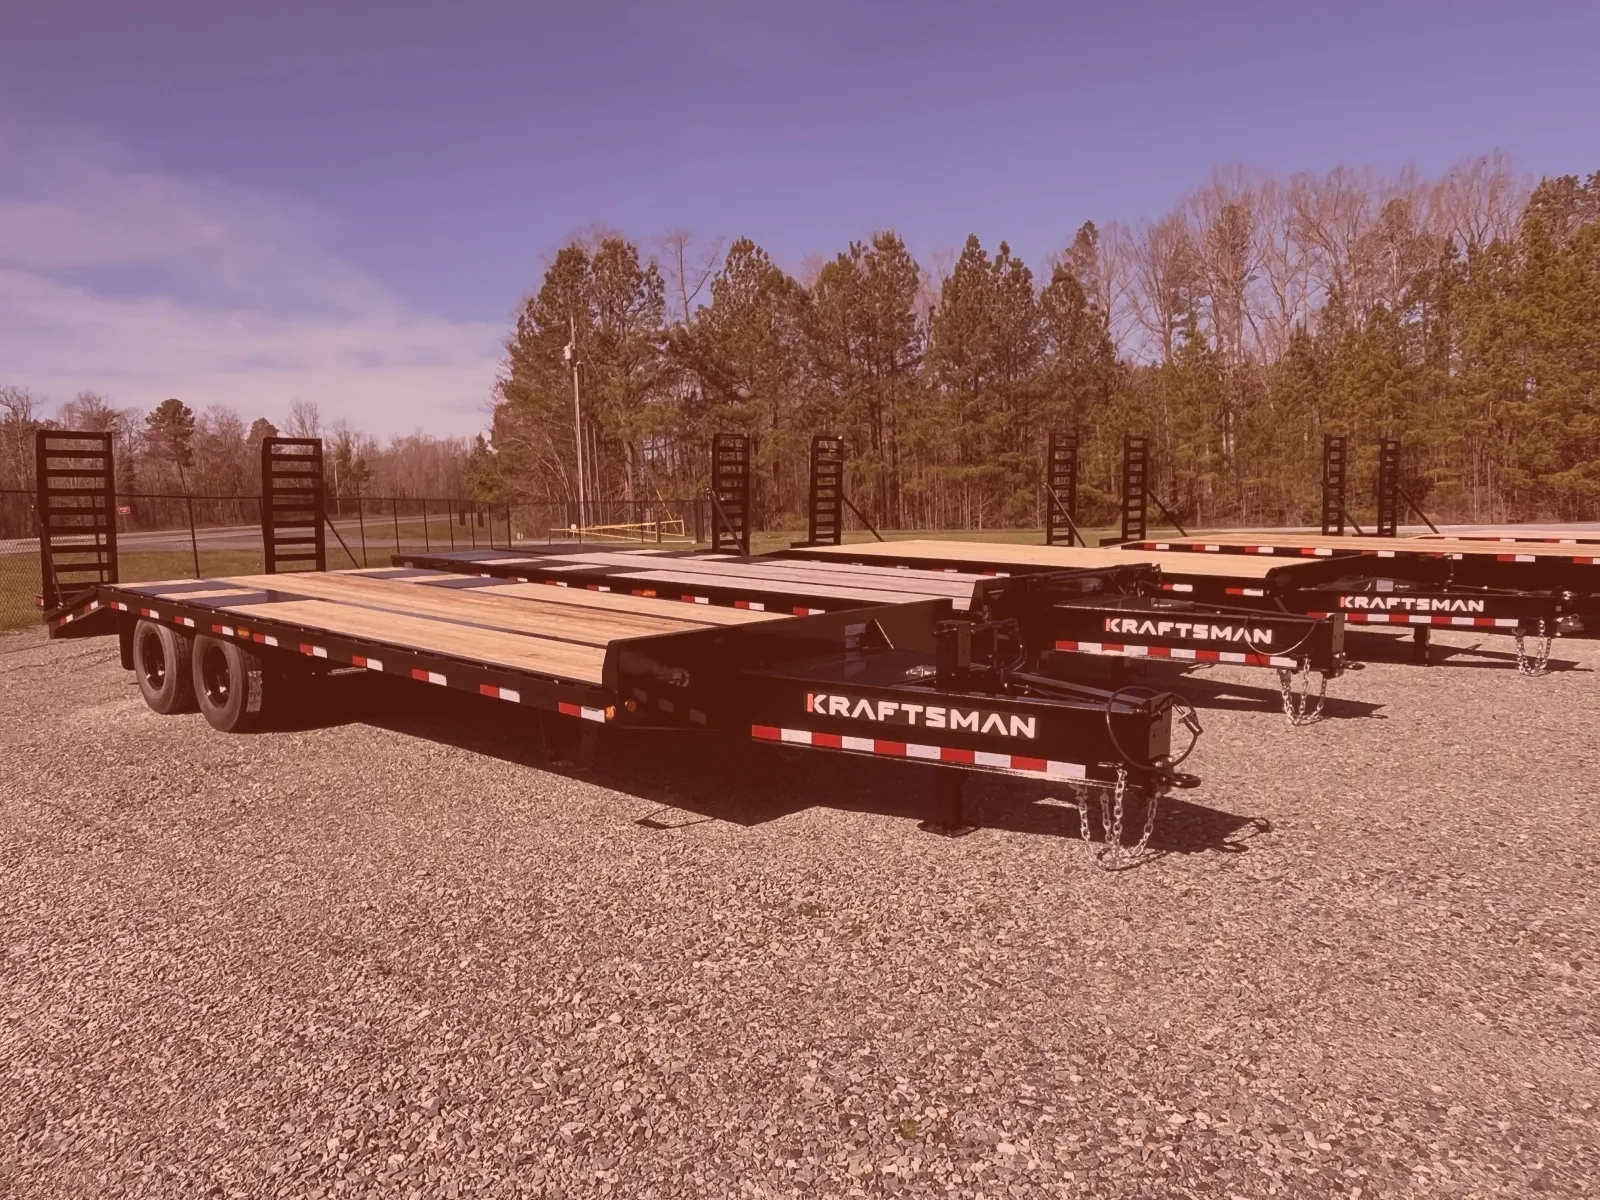 Kraftsman Deckover TAG trailers